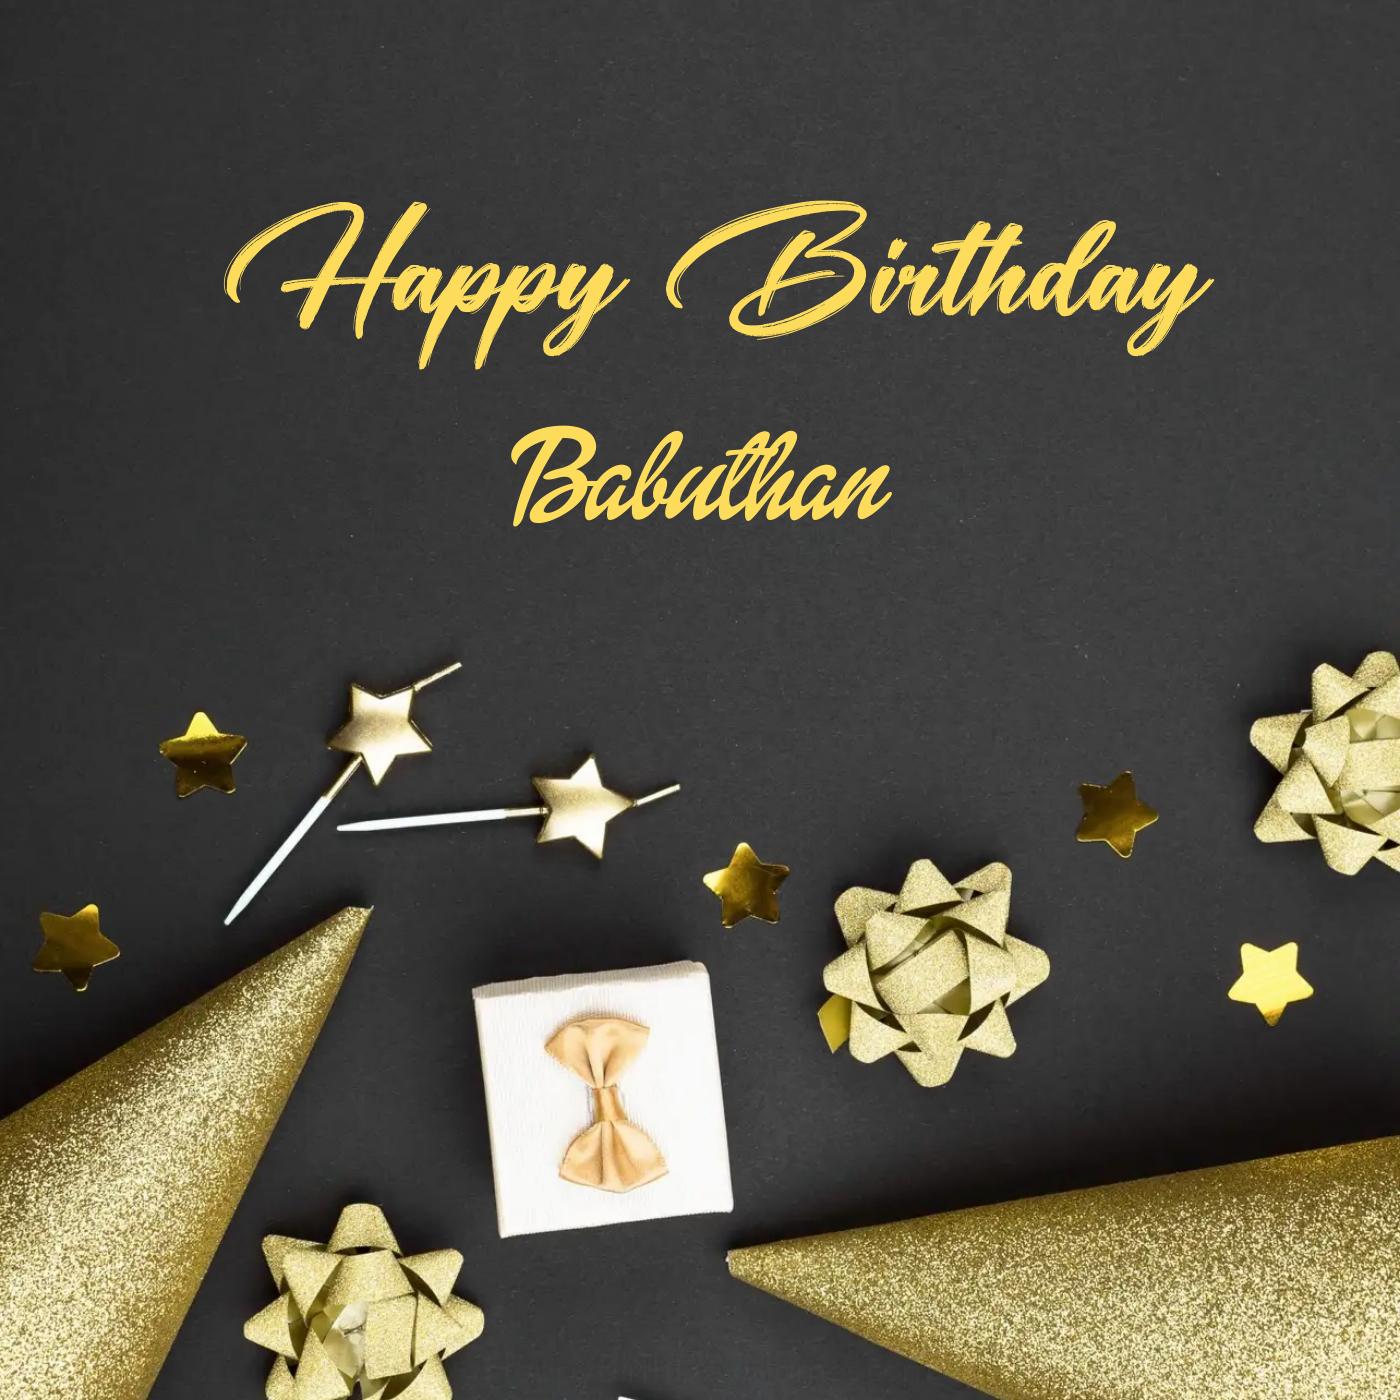 Happy Birthday Babuthan Golden Theme Card